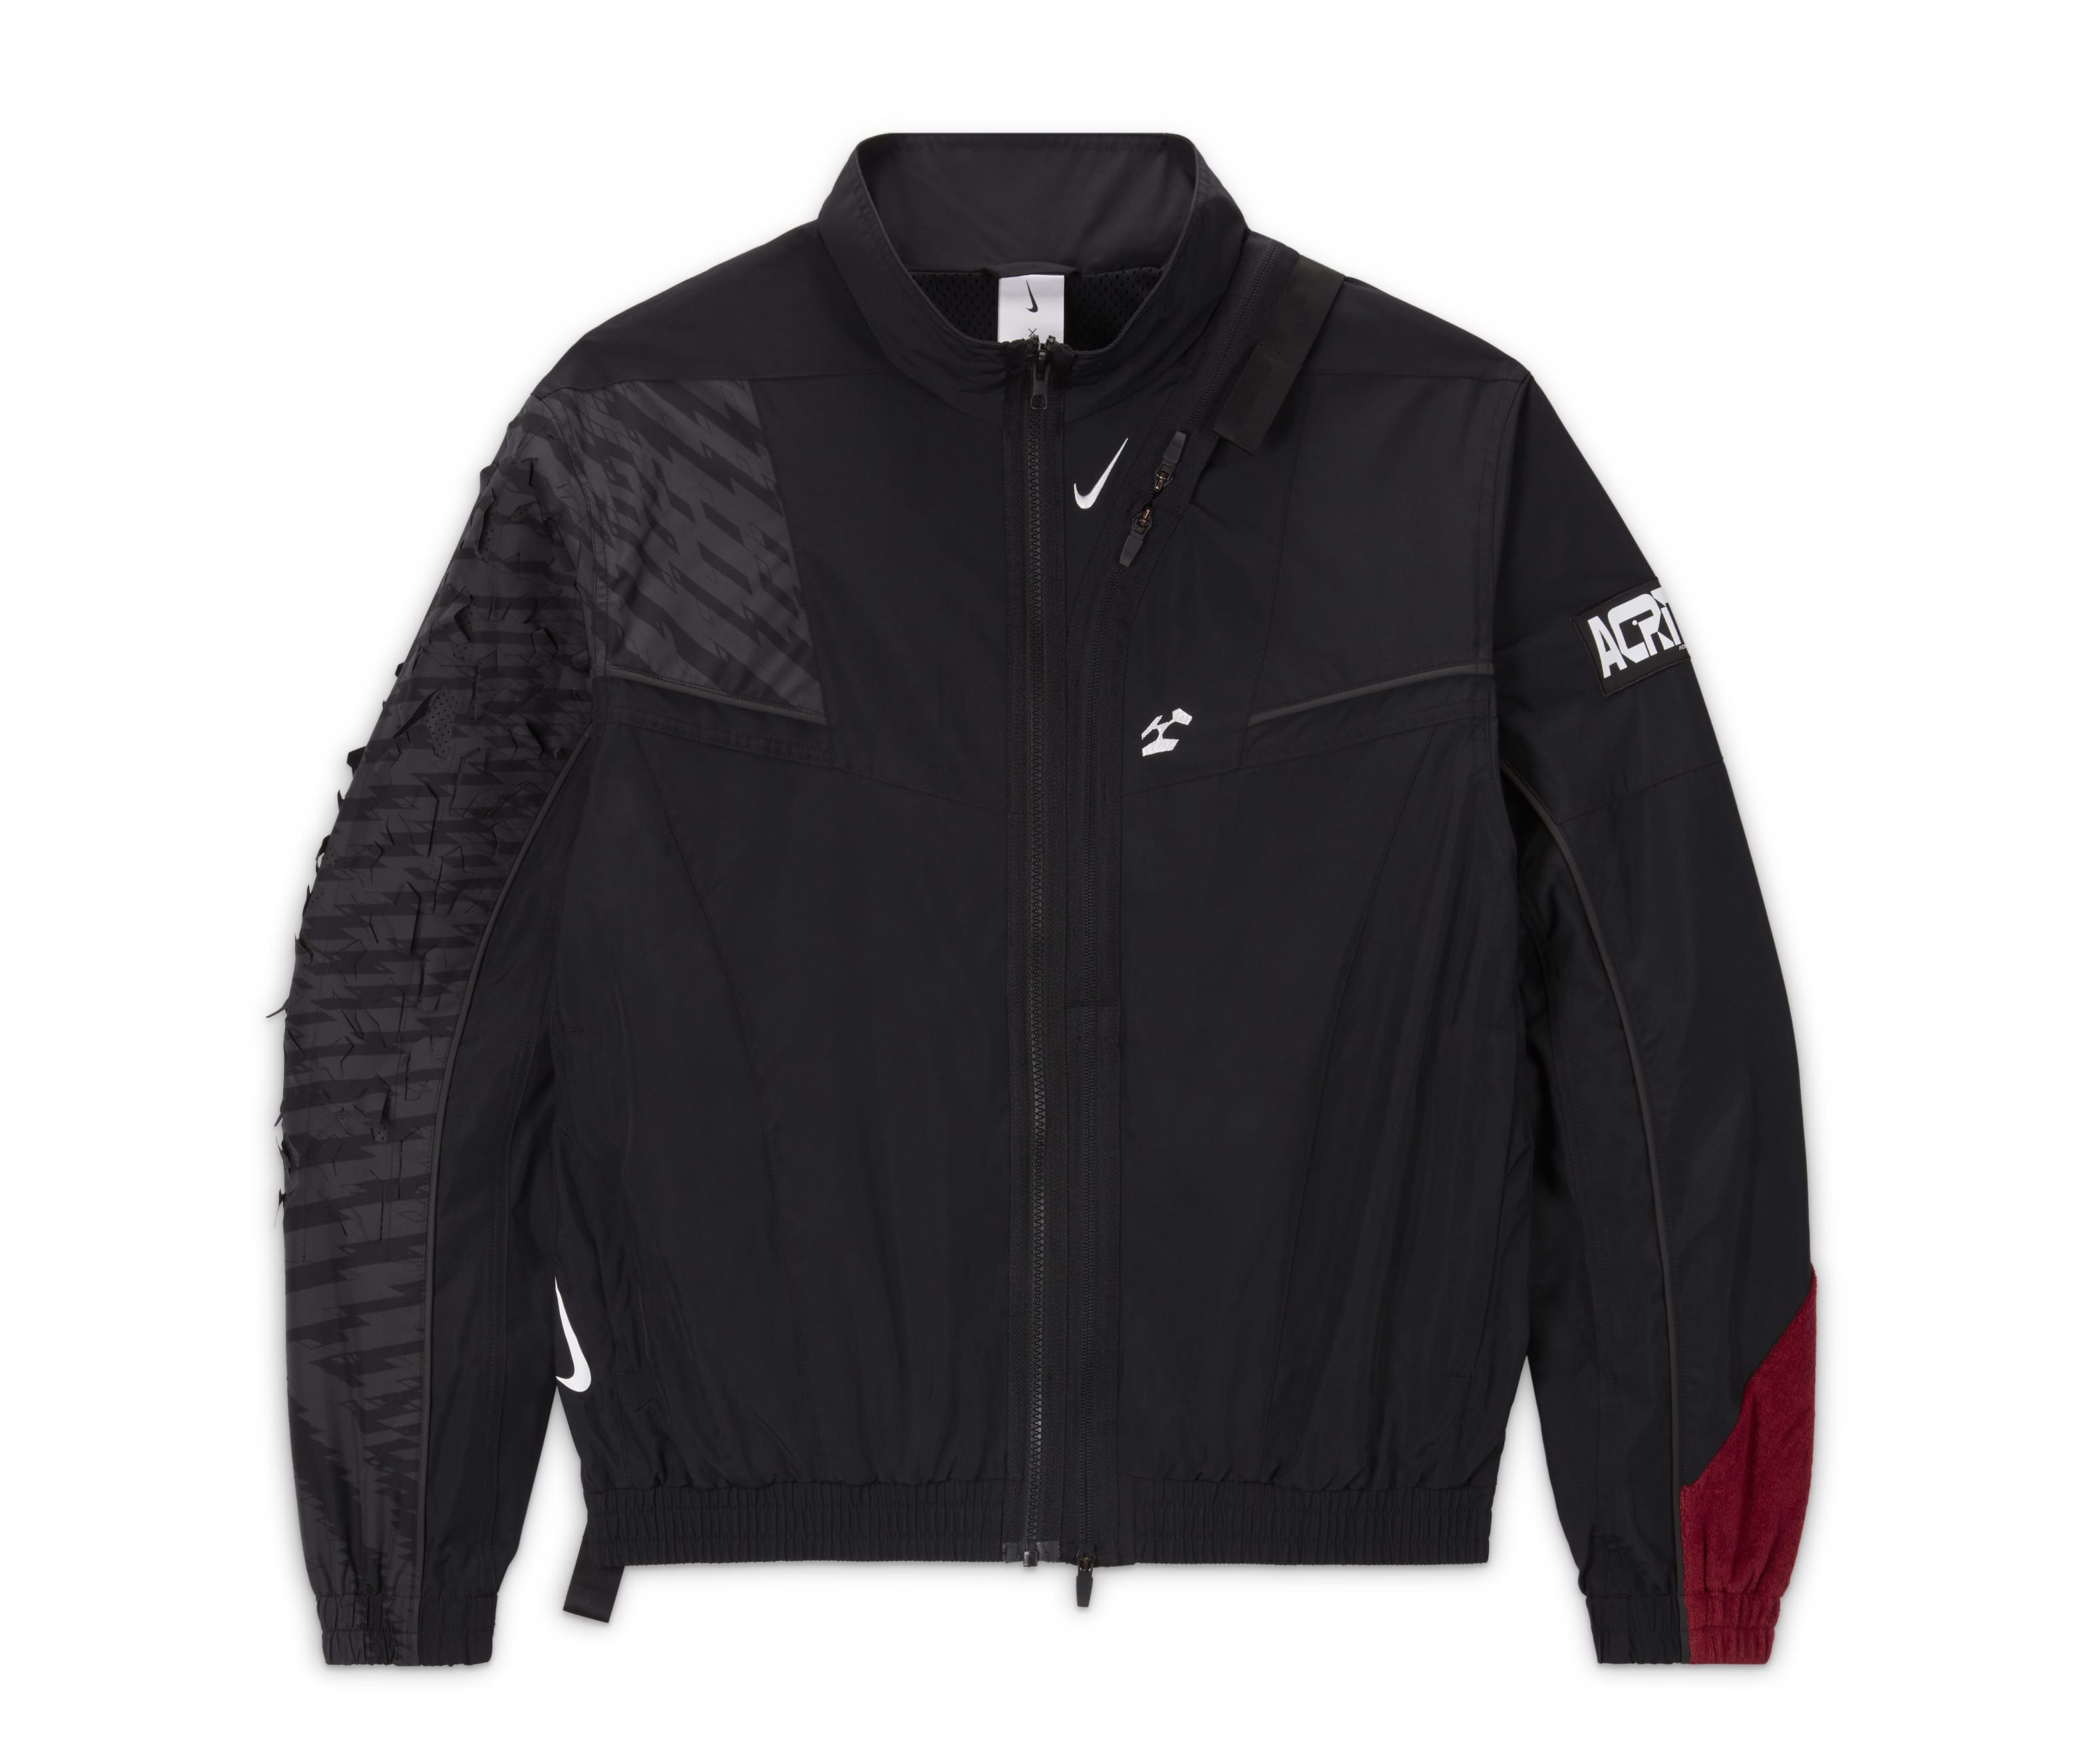 Acronym x Nike Woven Jacket (Black)